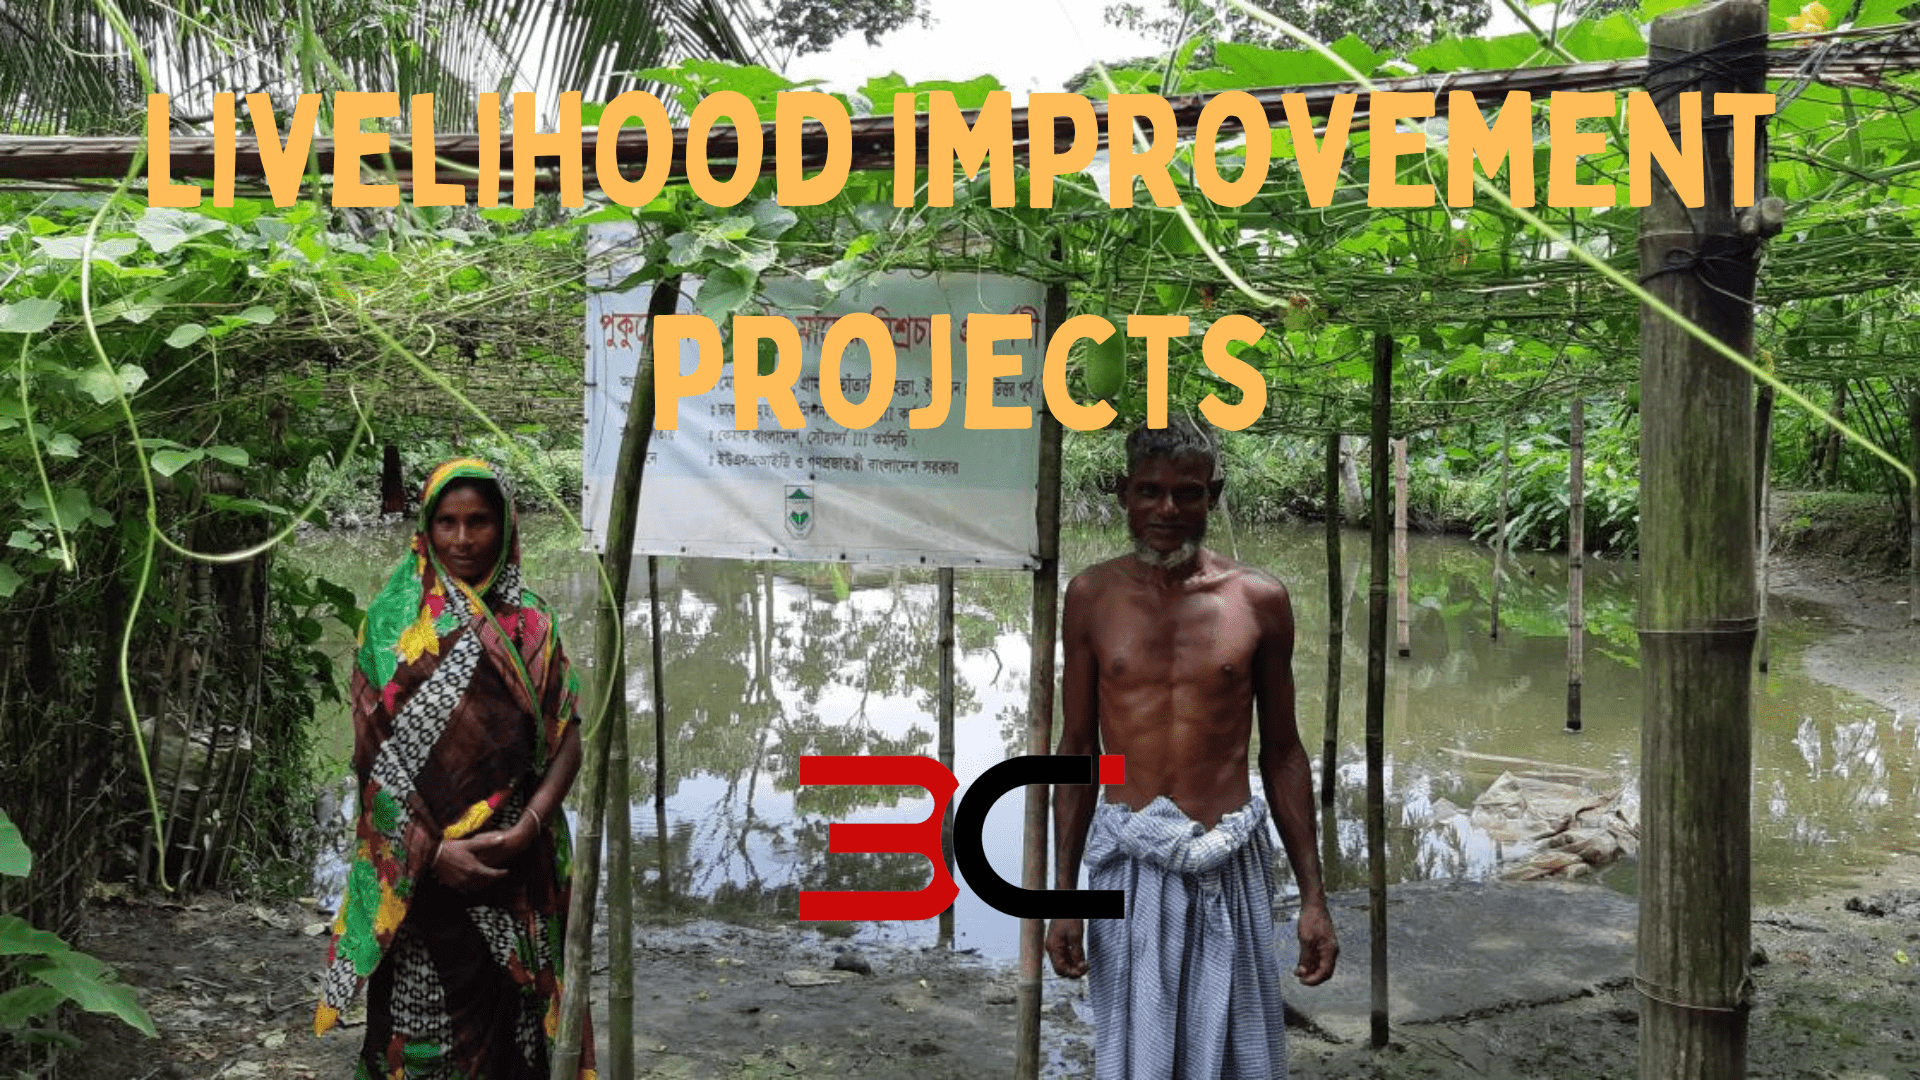 Livelihood improvement projects